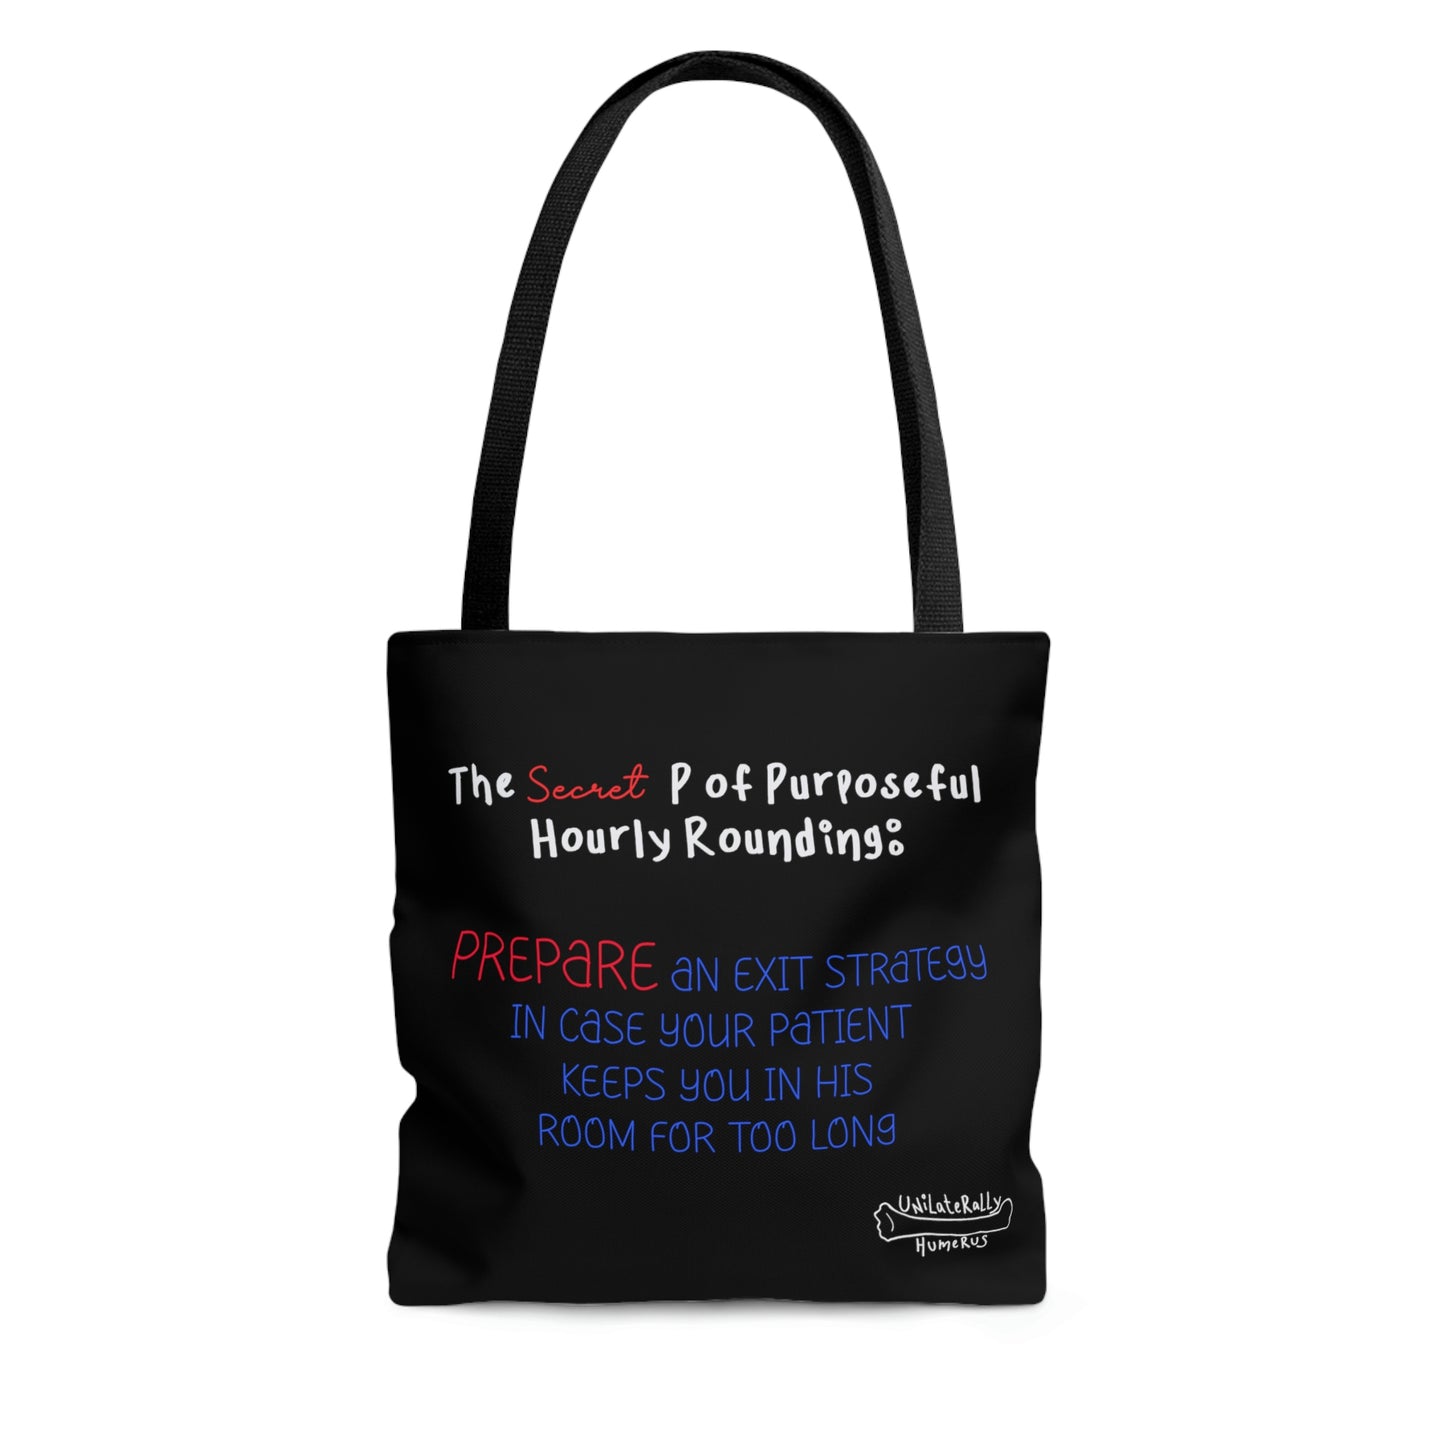 The Secret P of Purposeful Hourly Rounding Tote Bag! Nurse Gift! Nursing Assistant Gift! Nurse Preceptor Gift!